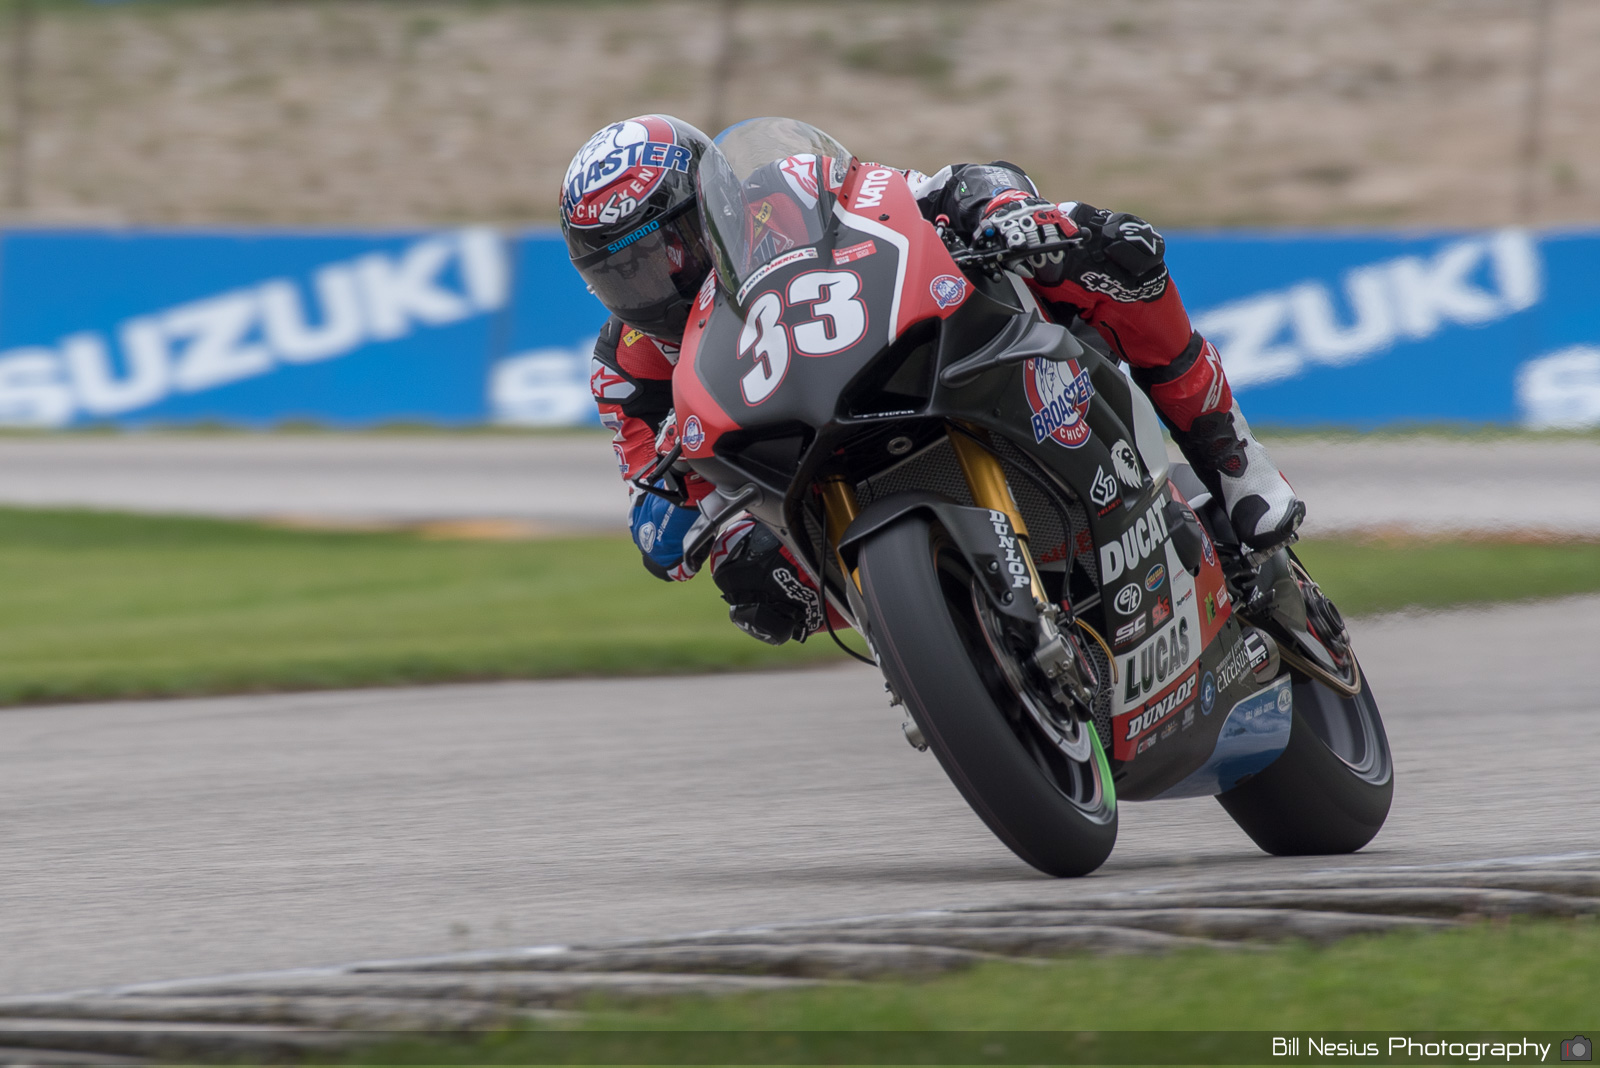 Kyle Wyman on the Number 33 Kyle Wyman Racing Ducati Panigale V4R / DSC_0685 / 4